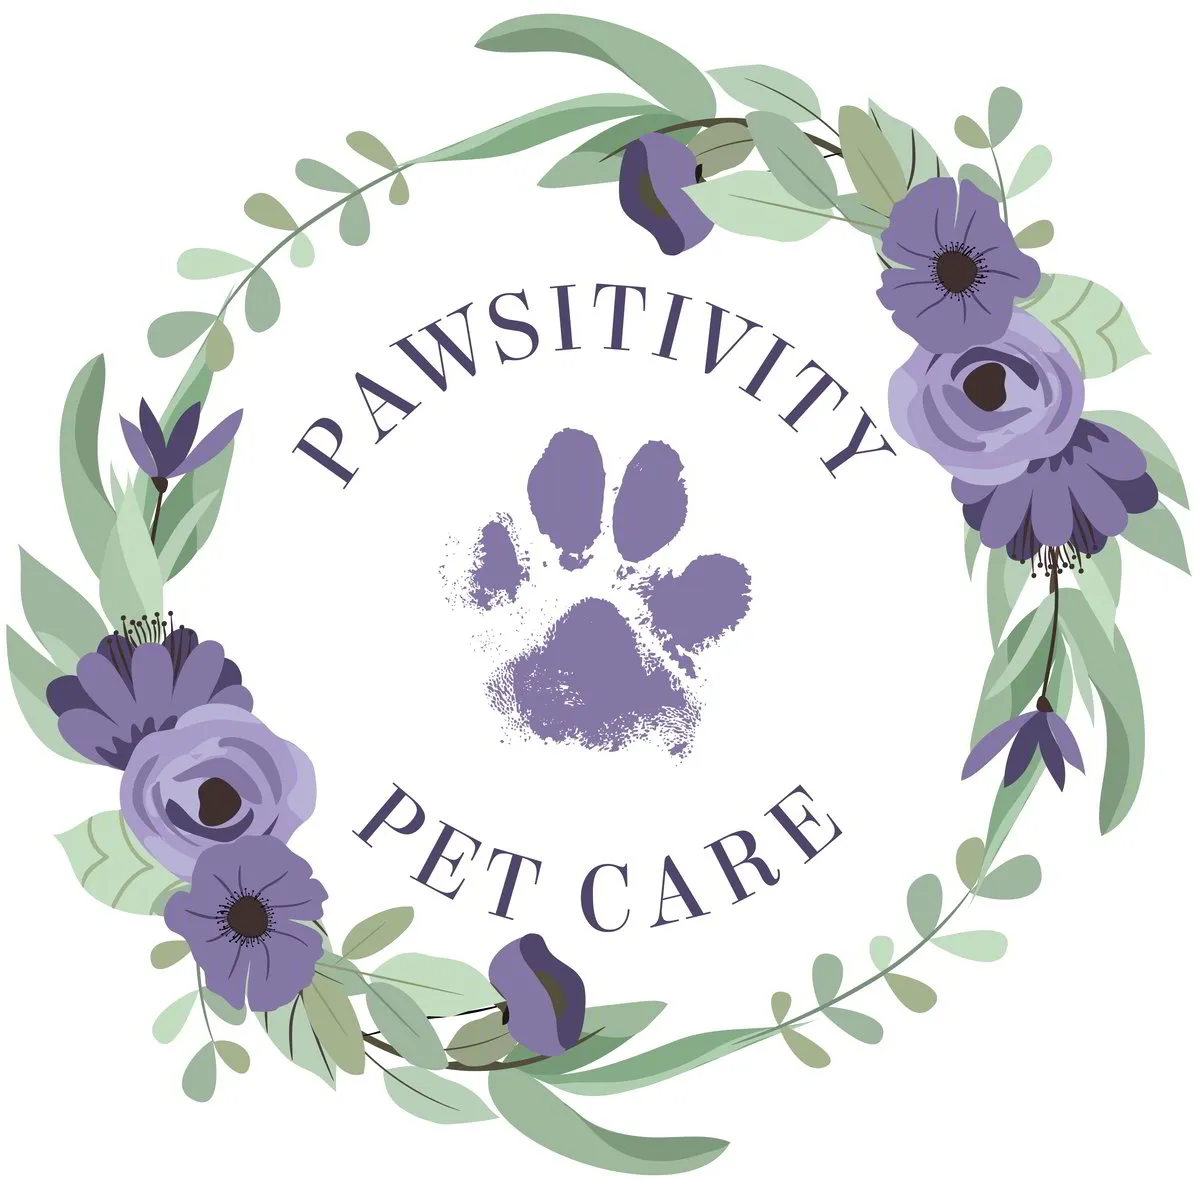 Pawsitivity Pet Care